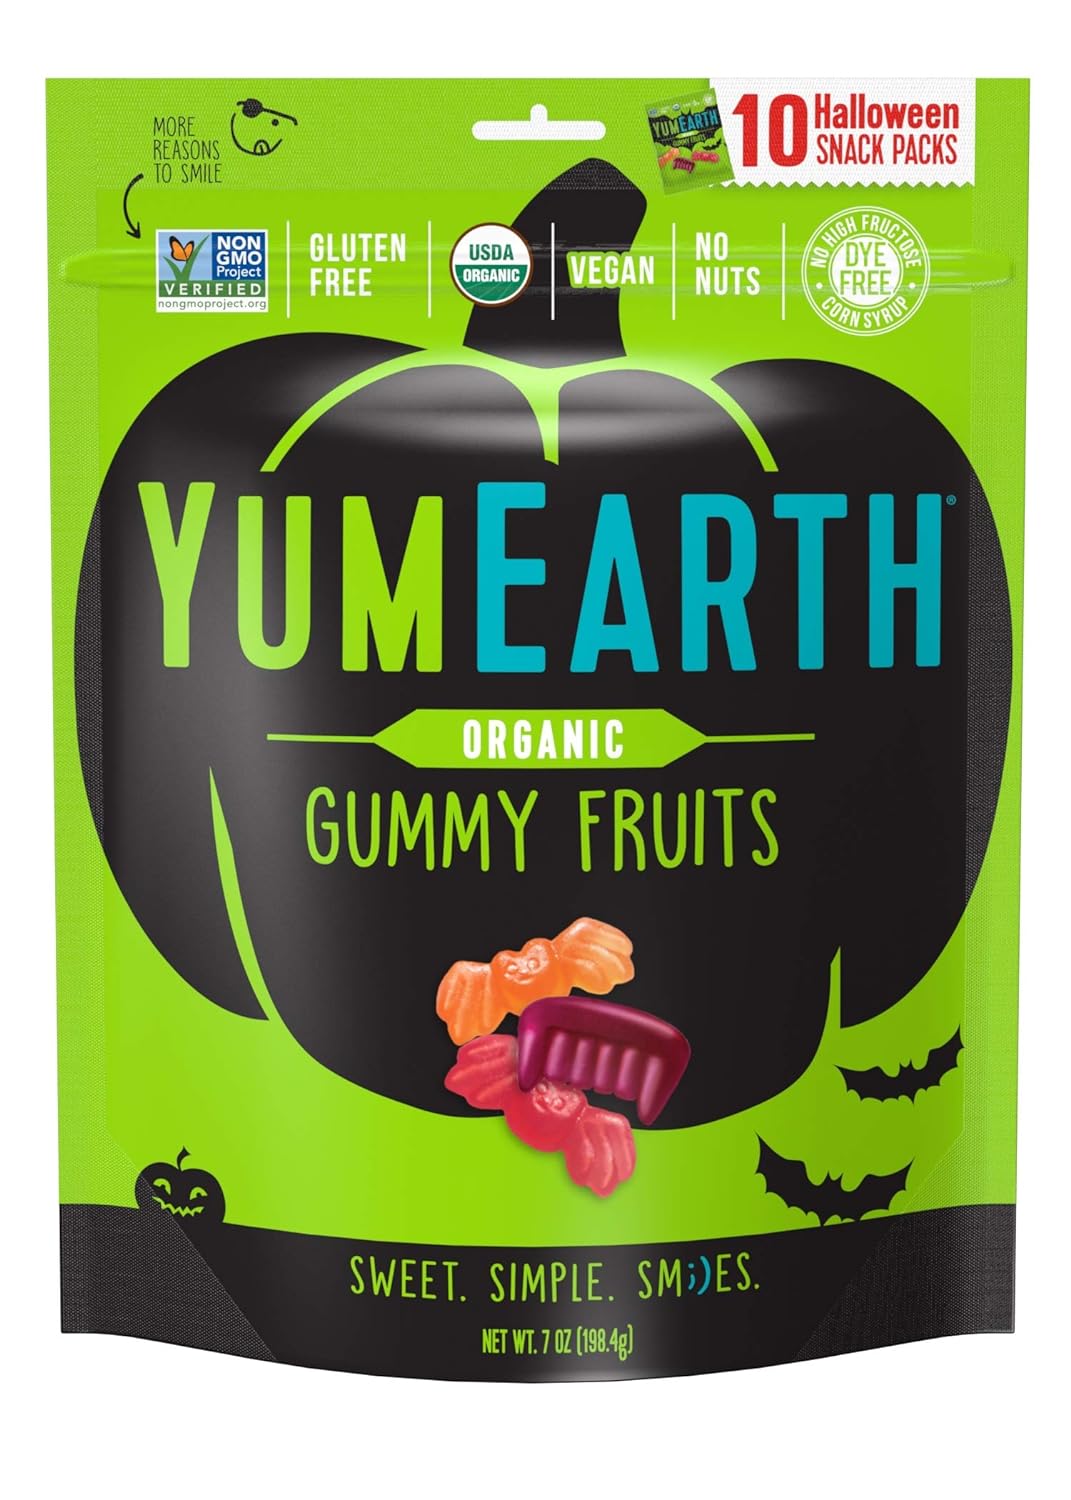 YumEarth Organic Halloween Gummy Fruits Review